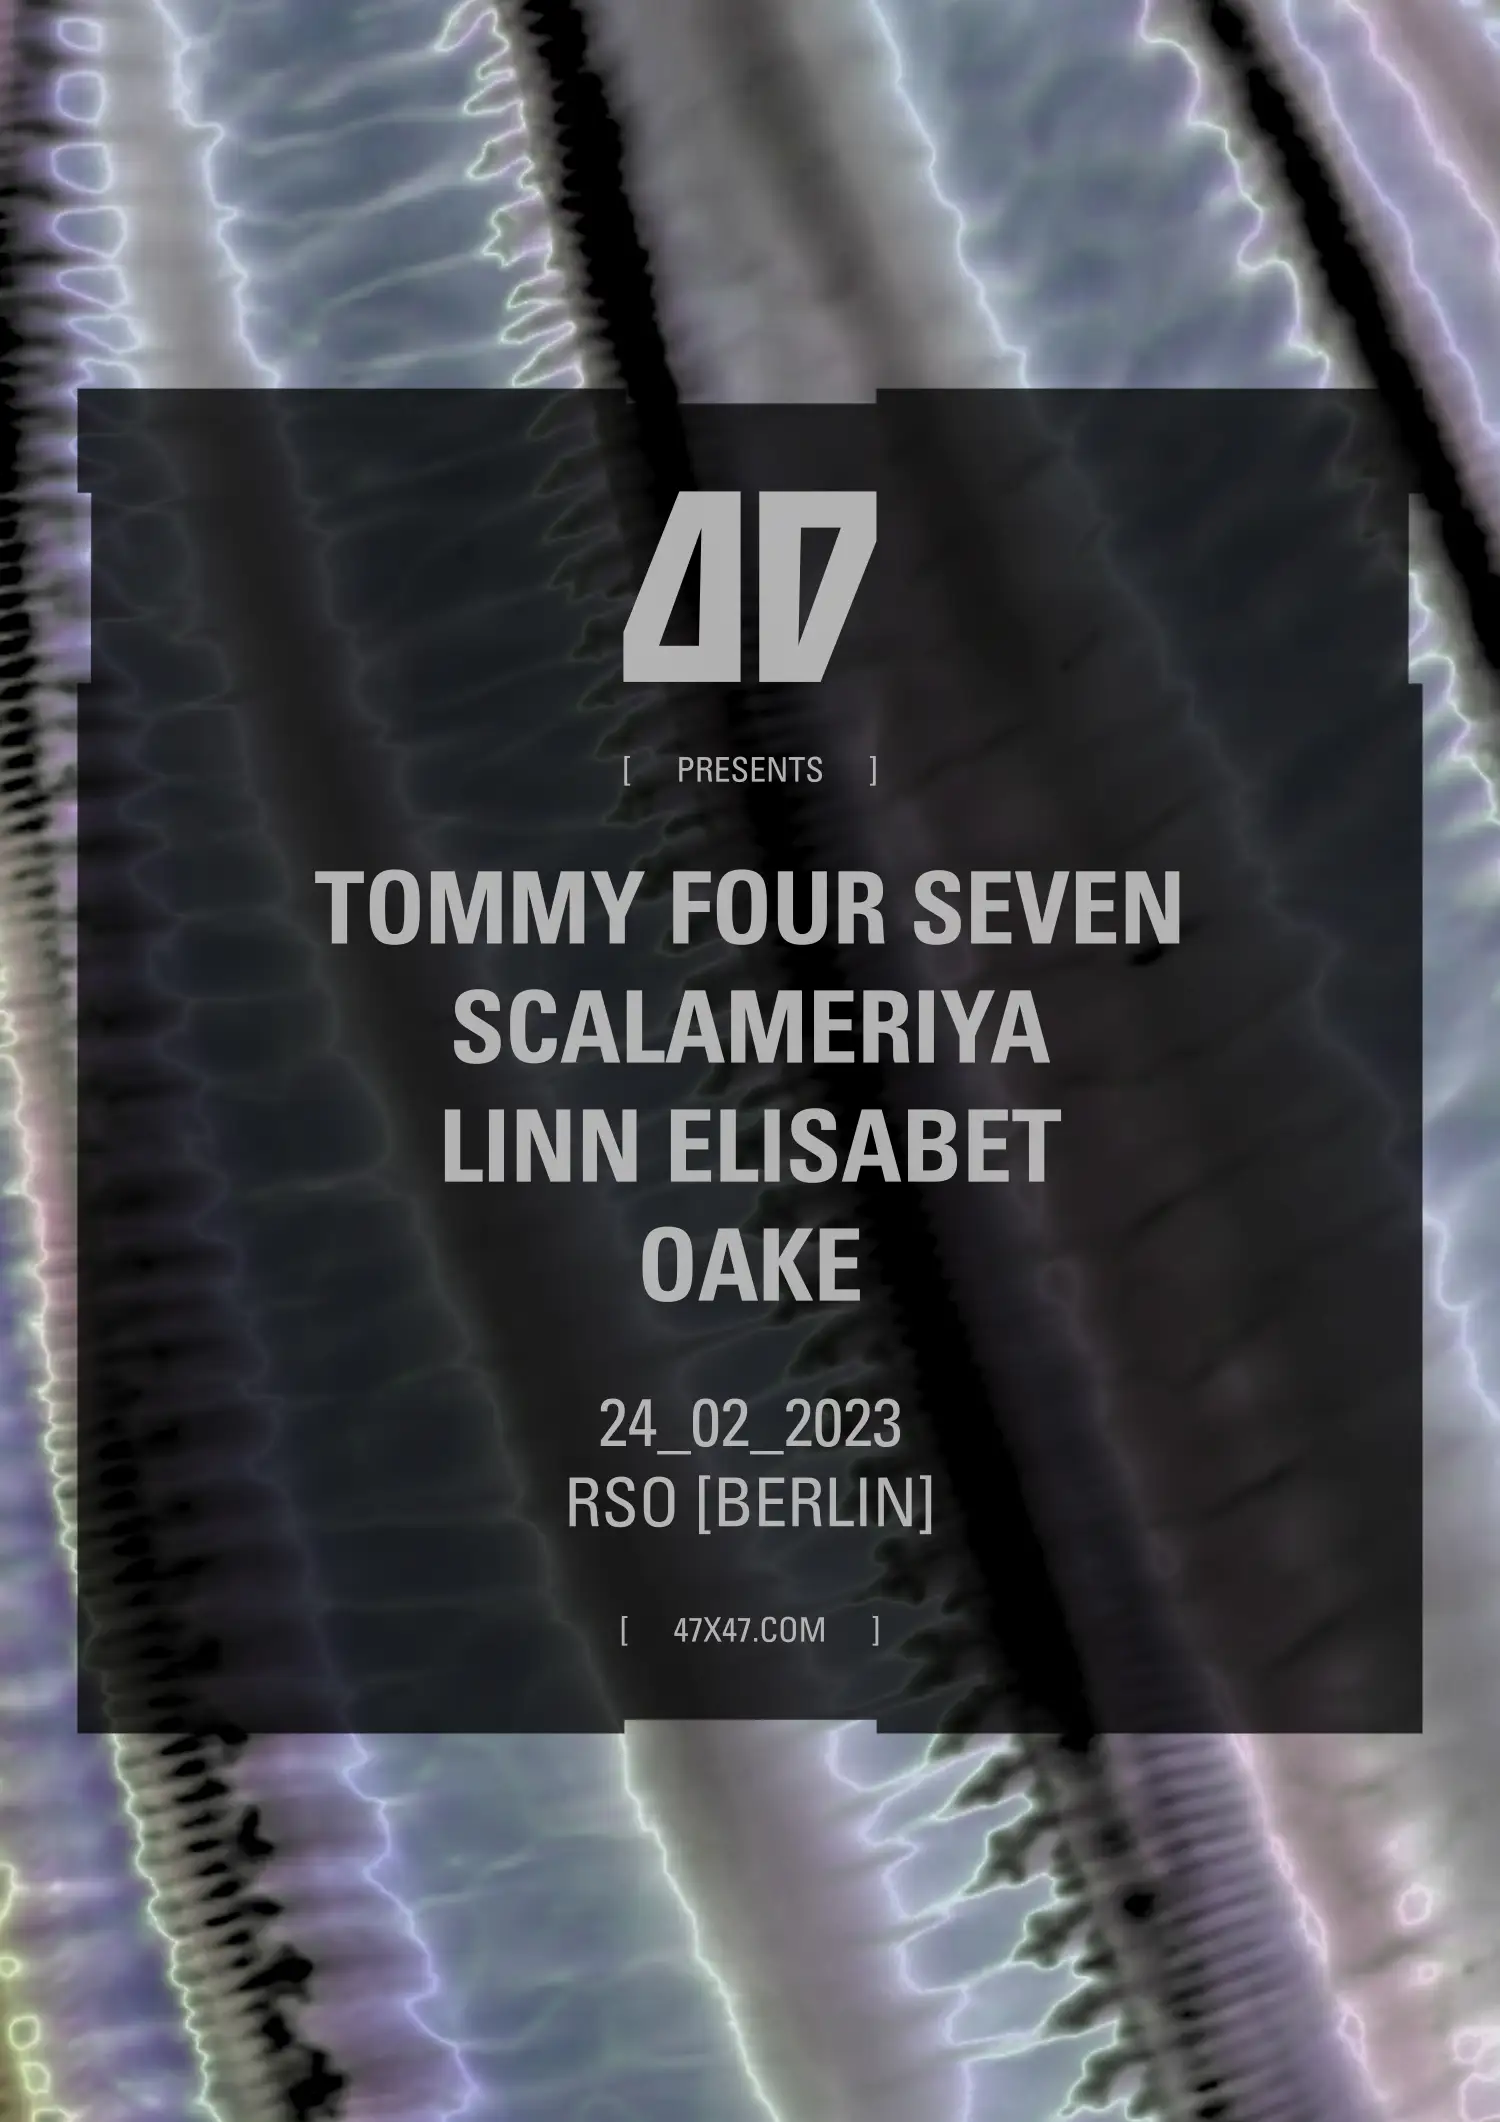 24.02. | 47 with Tommy Four Seven, Scalameriya, Linn Elisabet, Oake